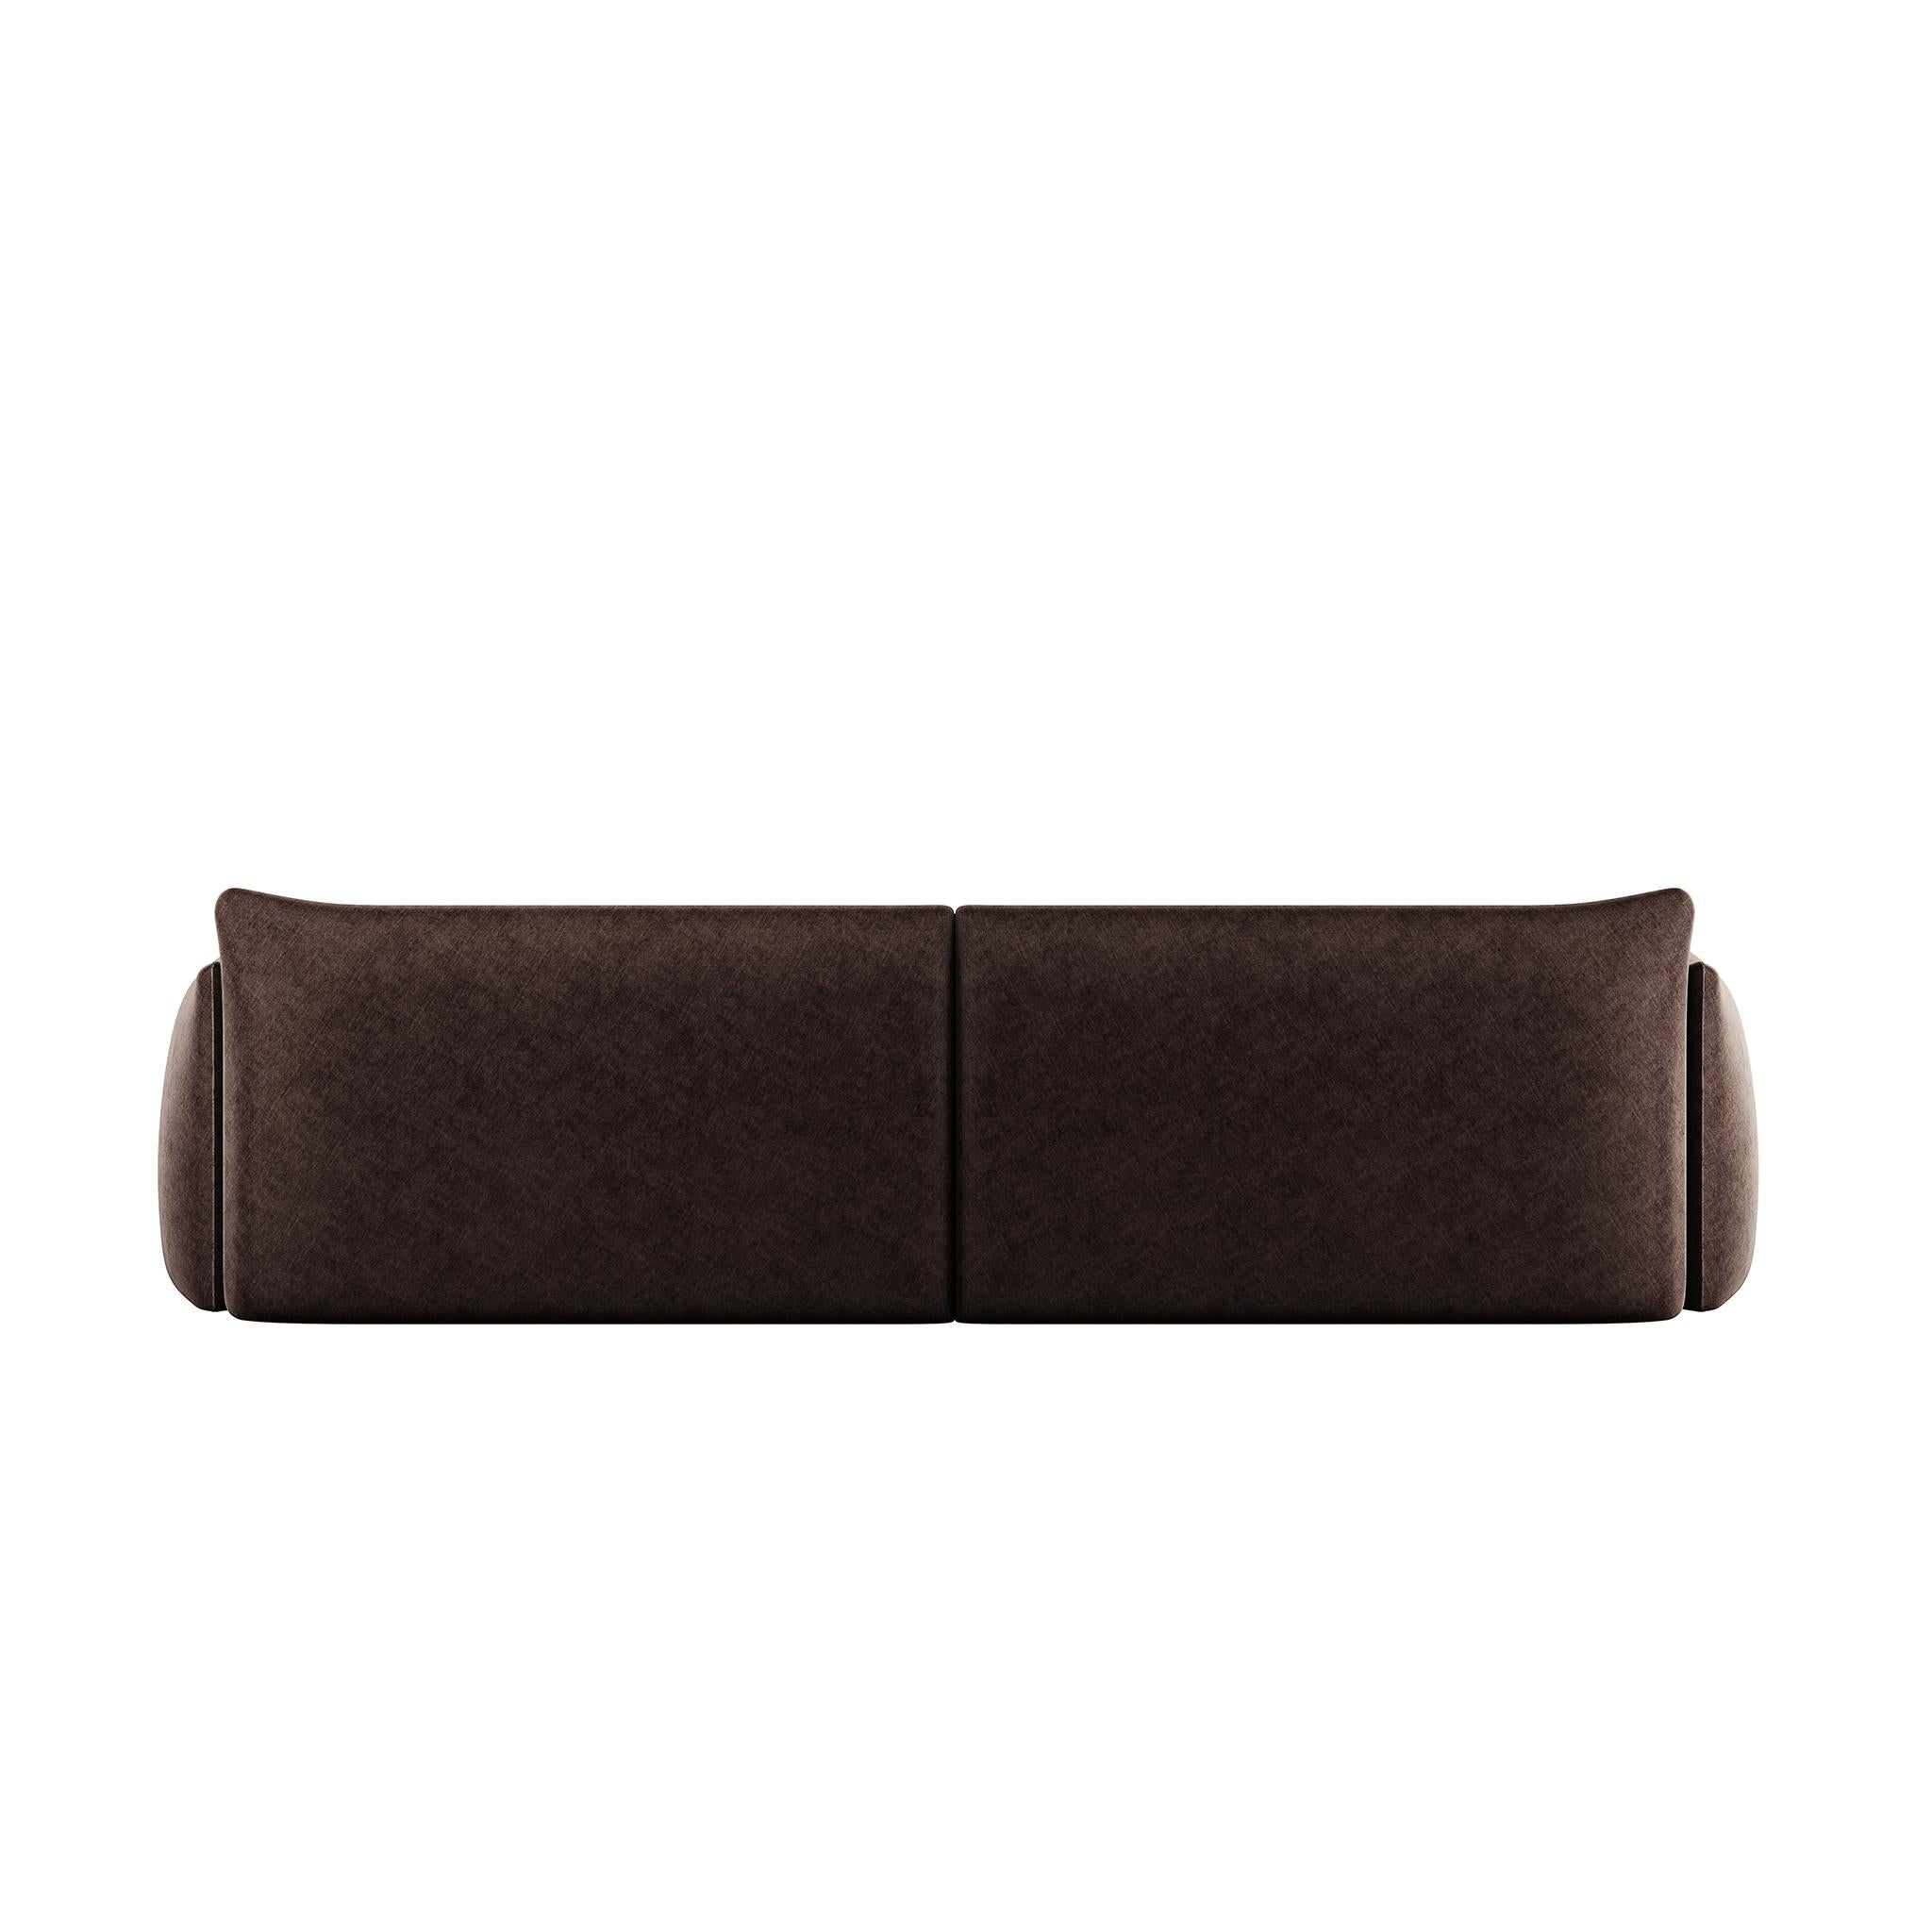 Minimalist Modern Customizable Sofa Upholstered in Dark Brown Chocolat Velvet For Sale 2